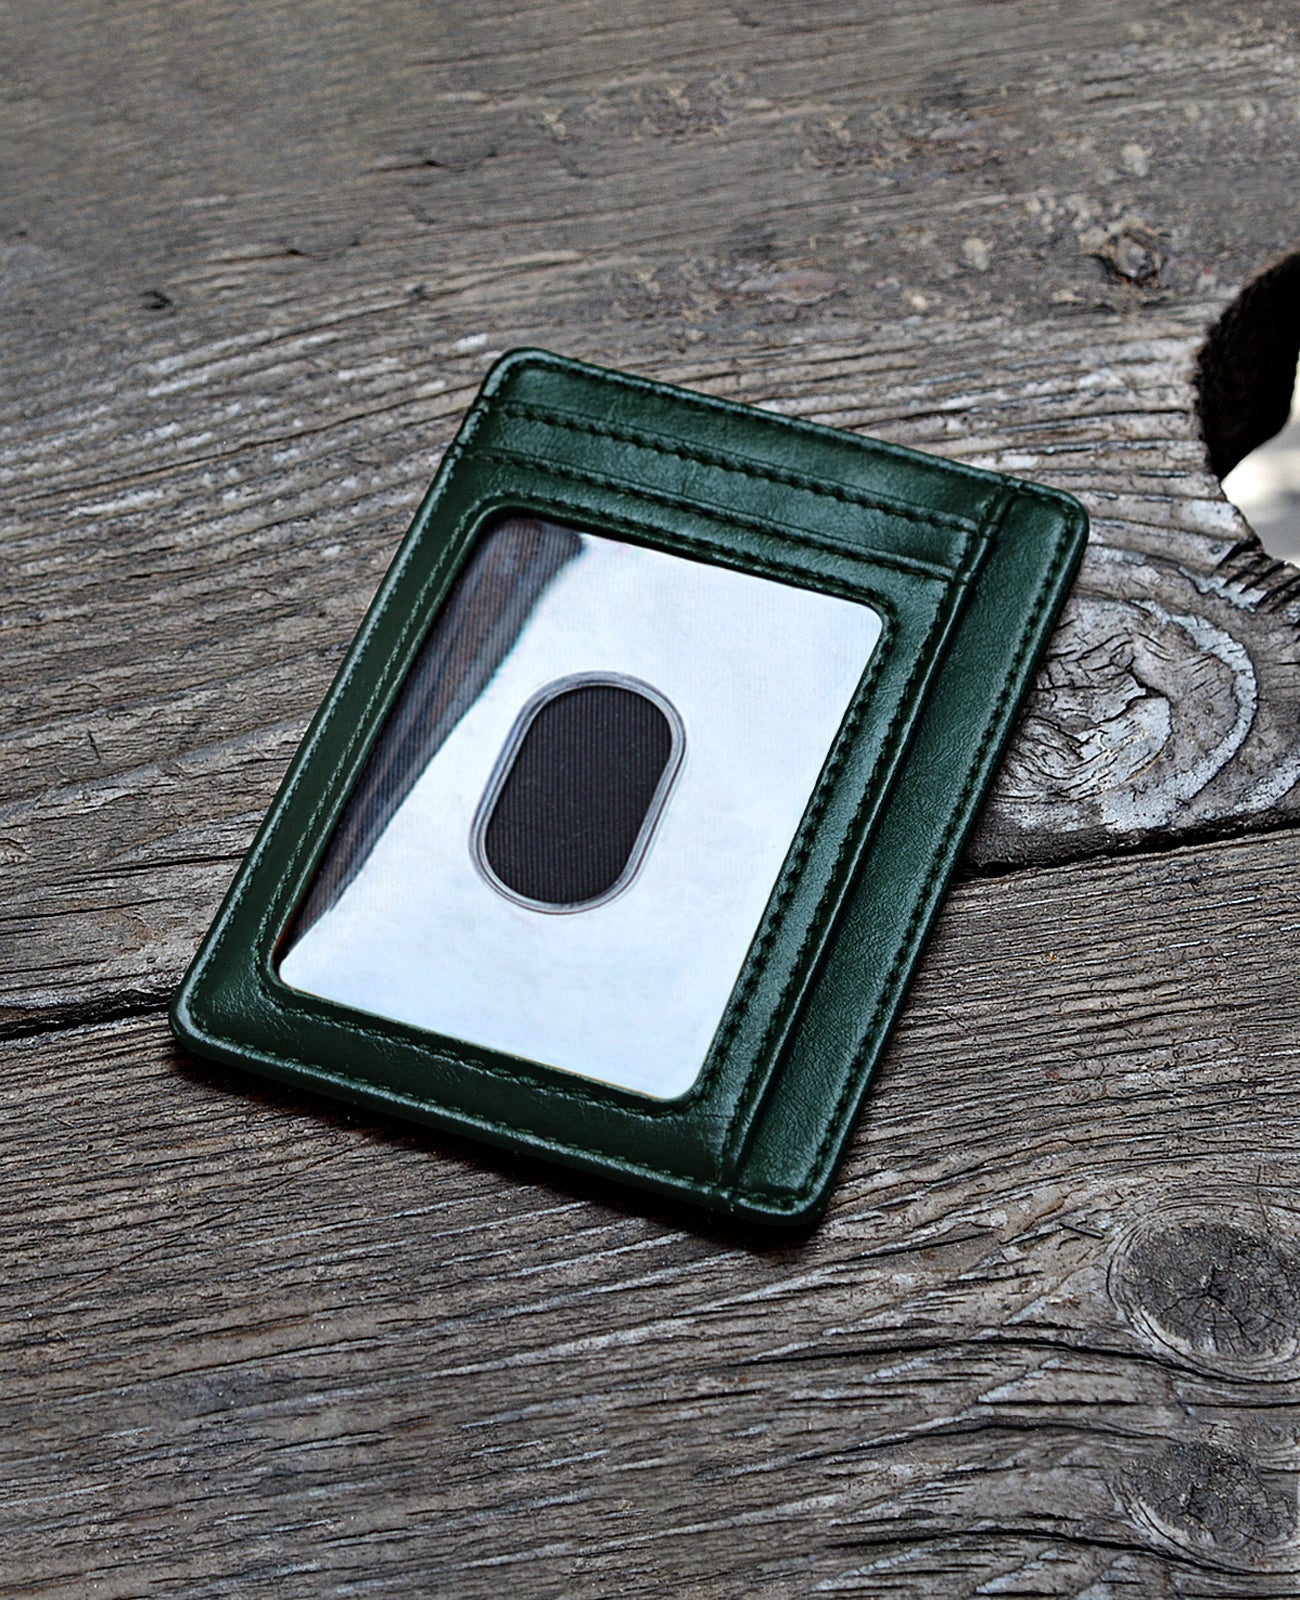 Buffway Slim Minimalist Front Pocket RFID Blocking Leather Wallets for Men and Women - Alaska Green